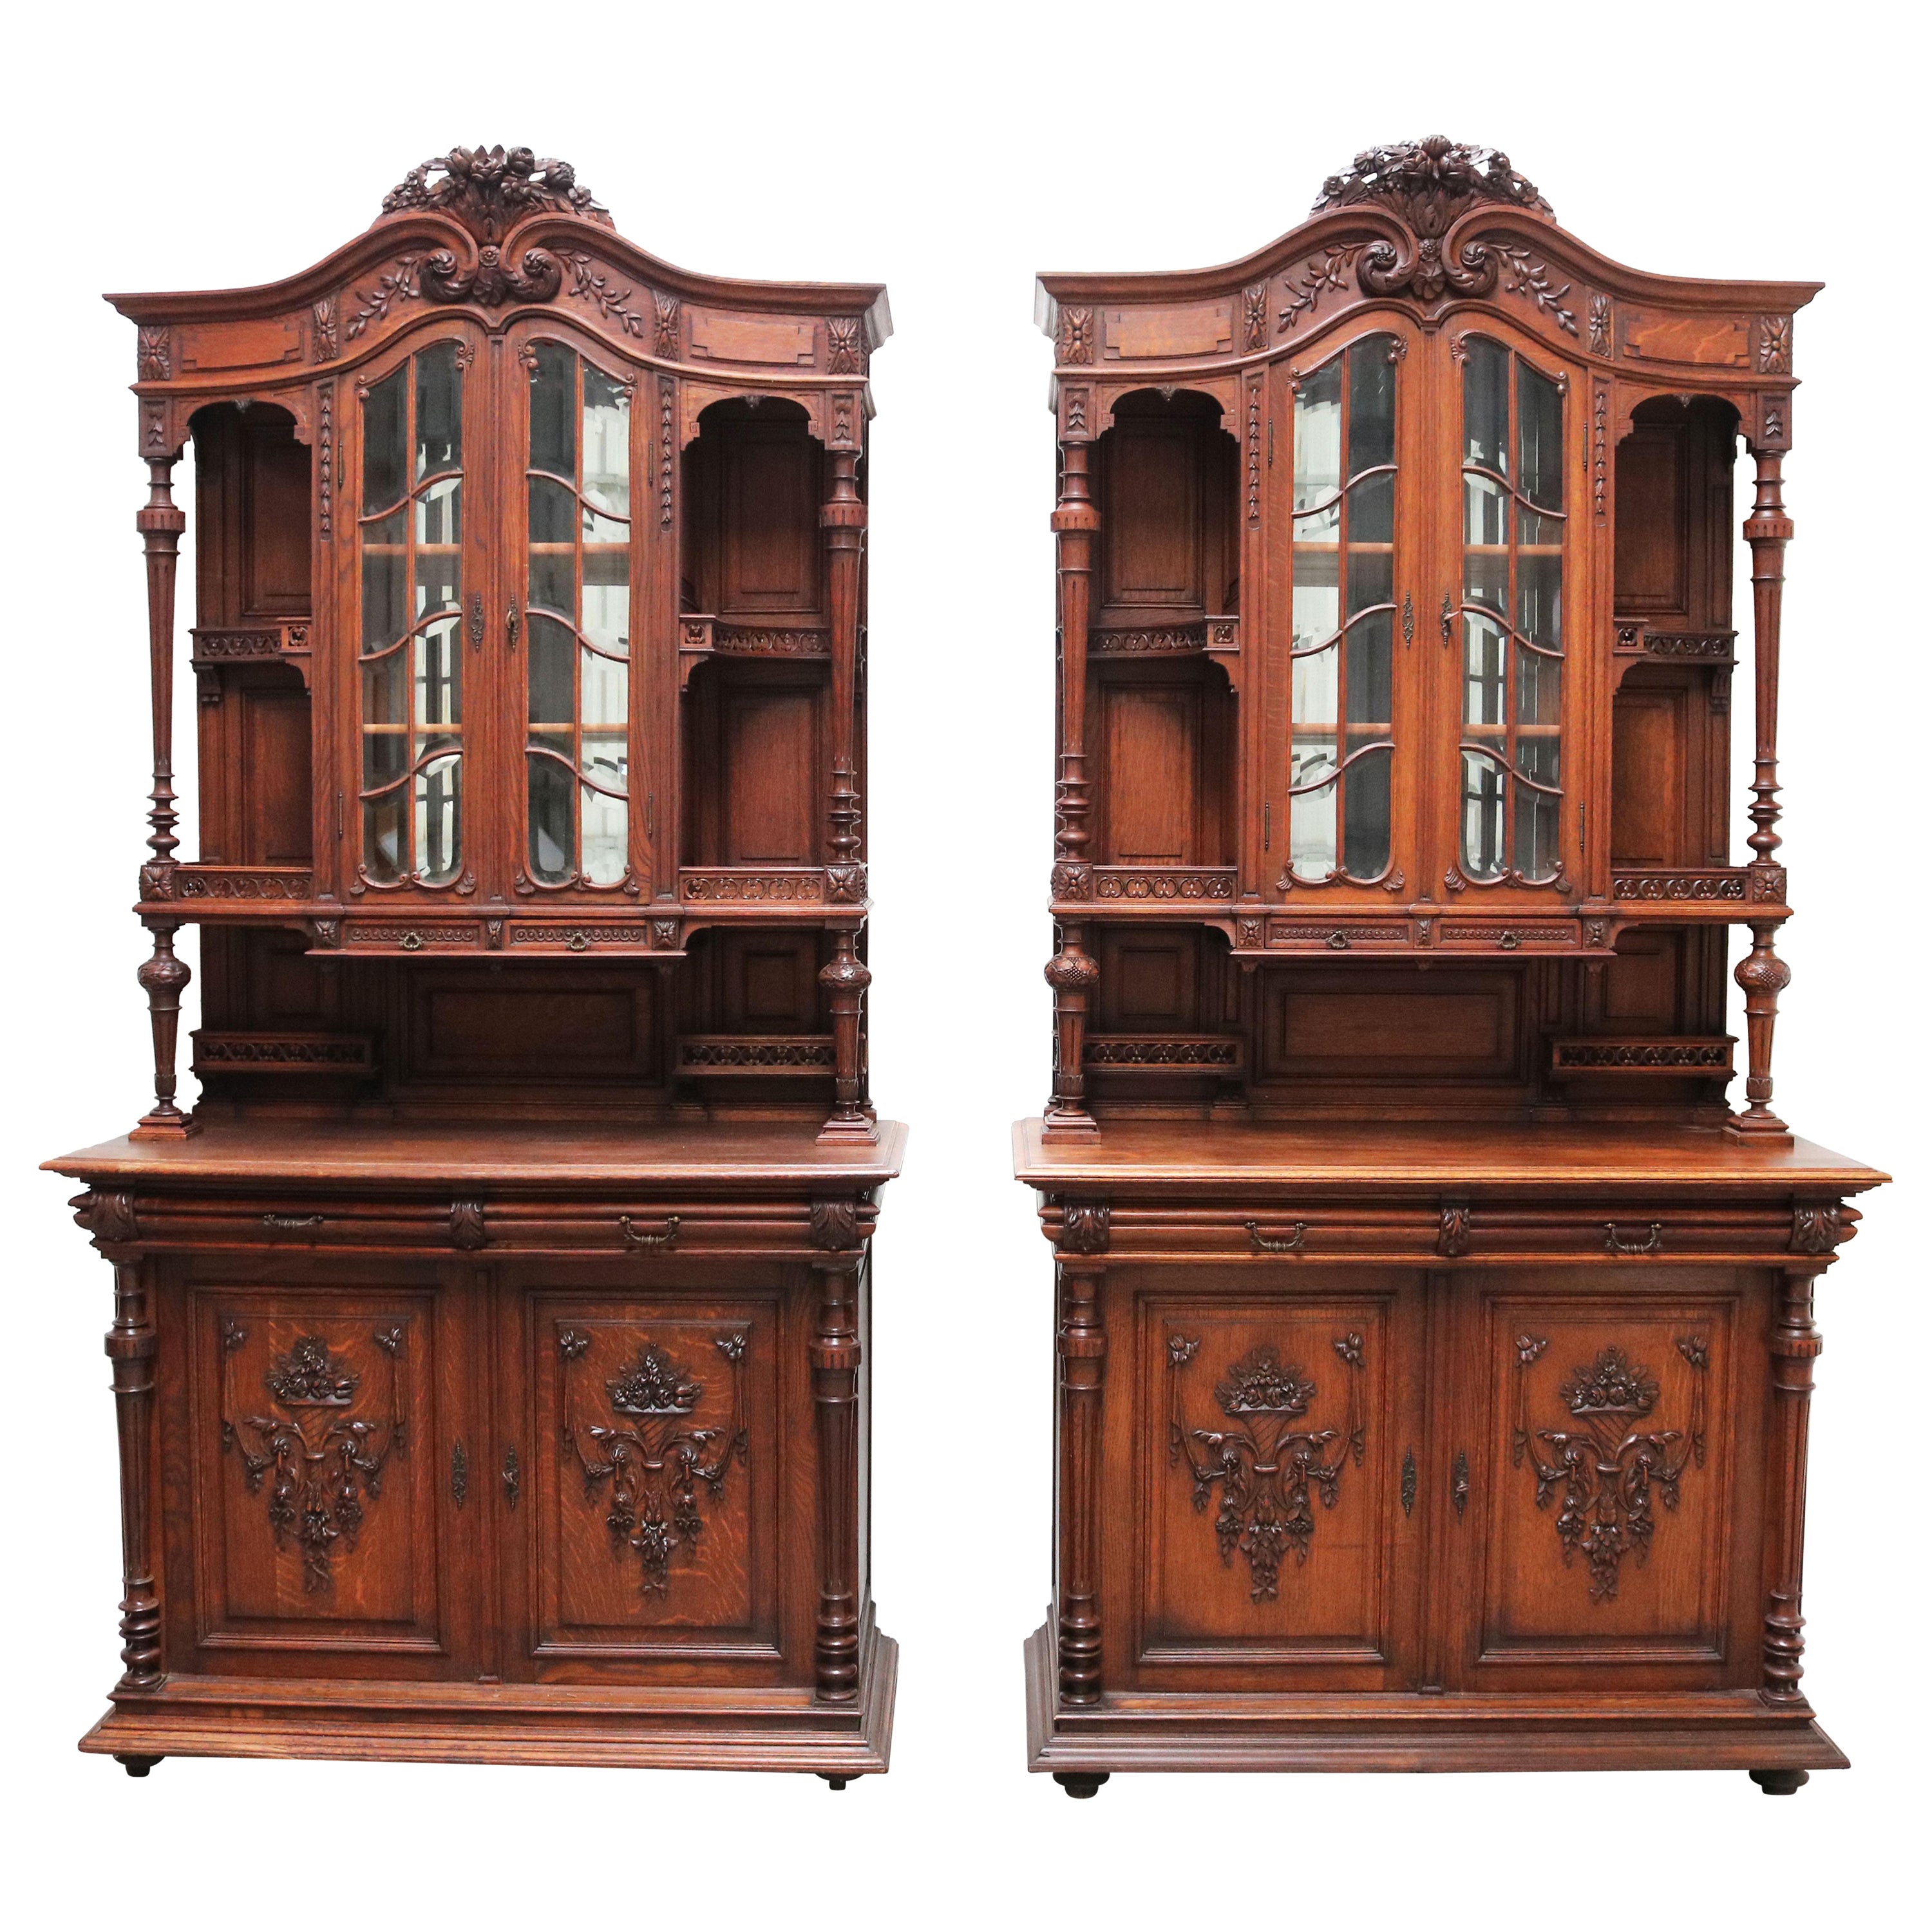 Pair of Large French Antique Renaissance Revival Buffet Cabinet Oak 19th Century